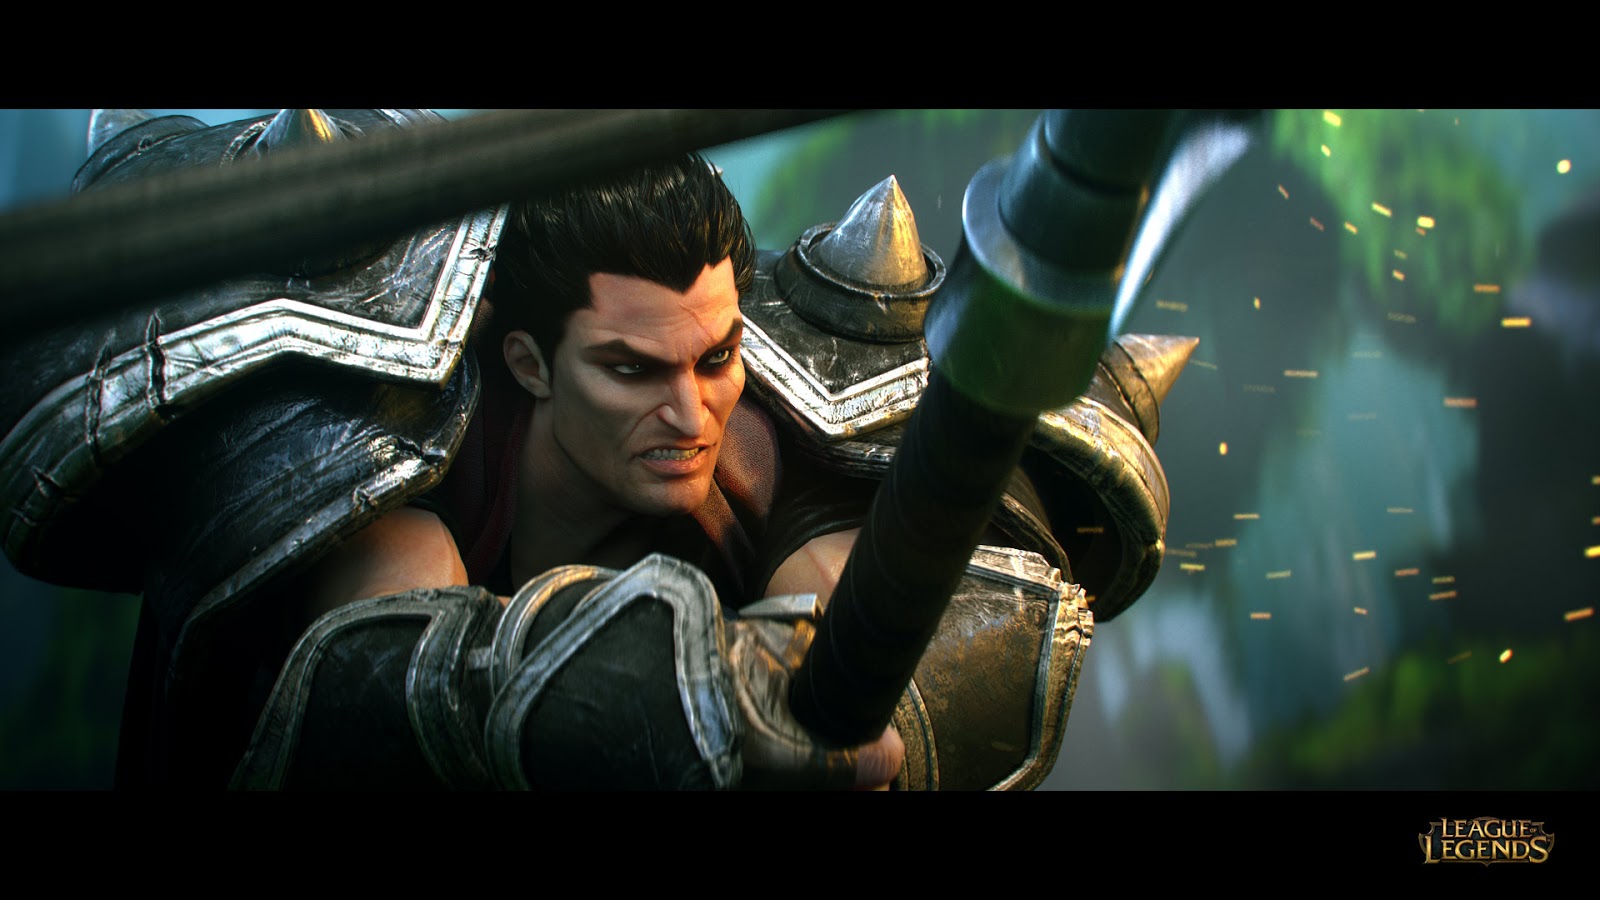 General 1600x900 League of Legends video games PC gaming video game art video game men dark hair warrior fantasy men fantasy art Darius (League of Legends)